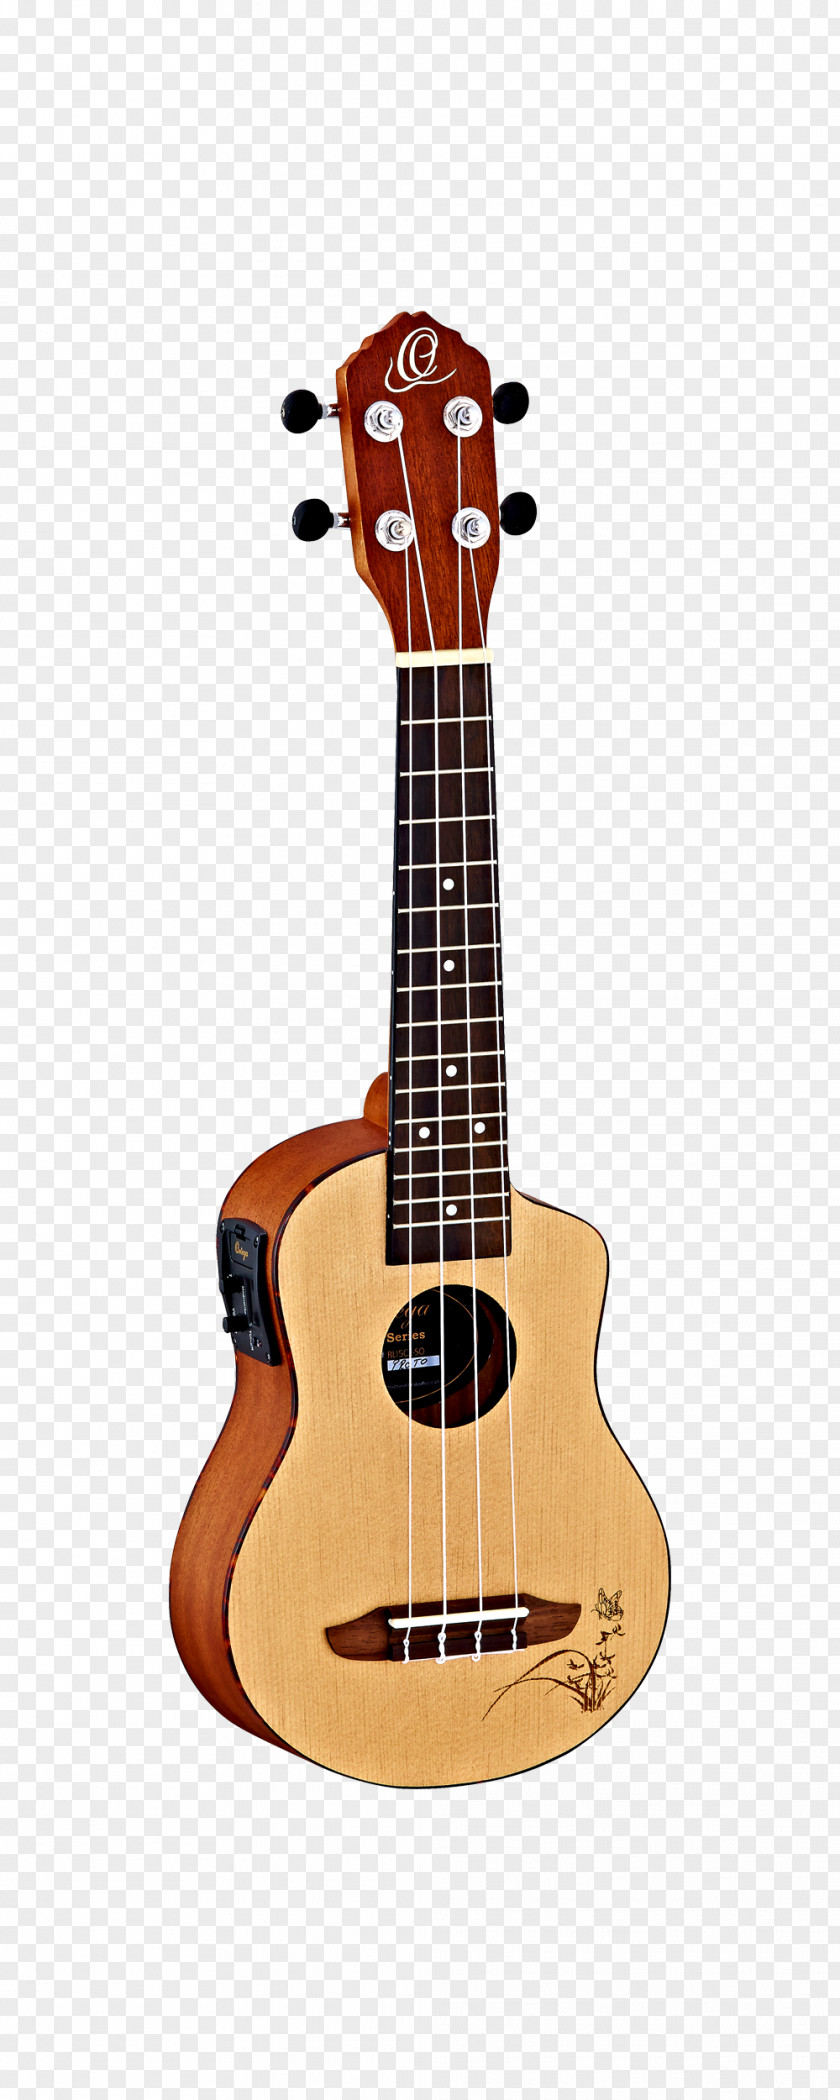 Amancio Ortega Ukulele Flamenco Guitar Musical Instruments PNG